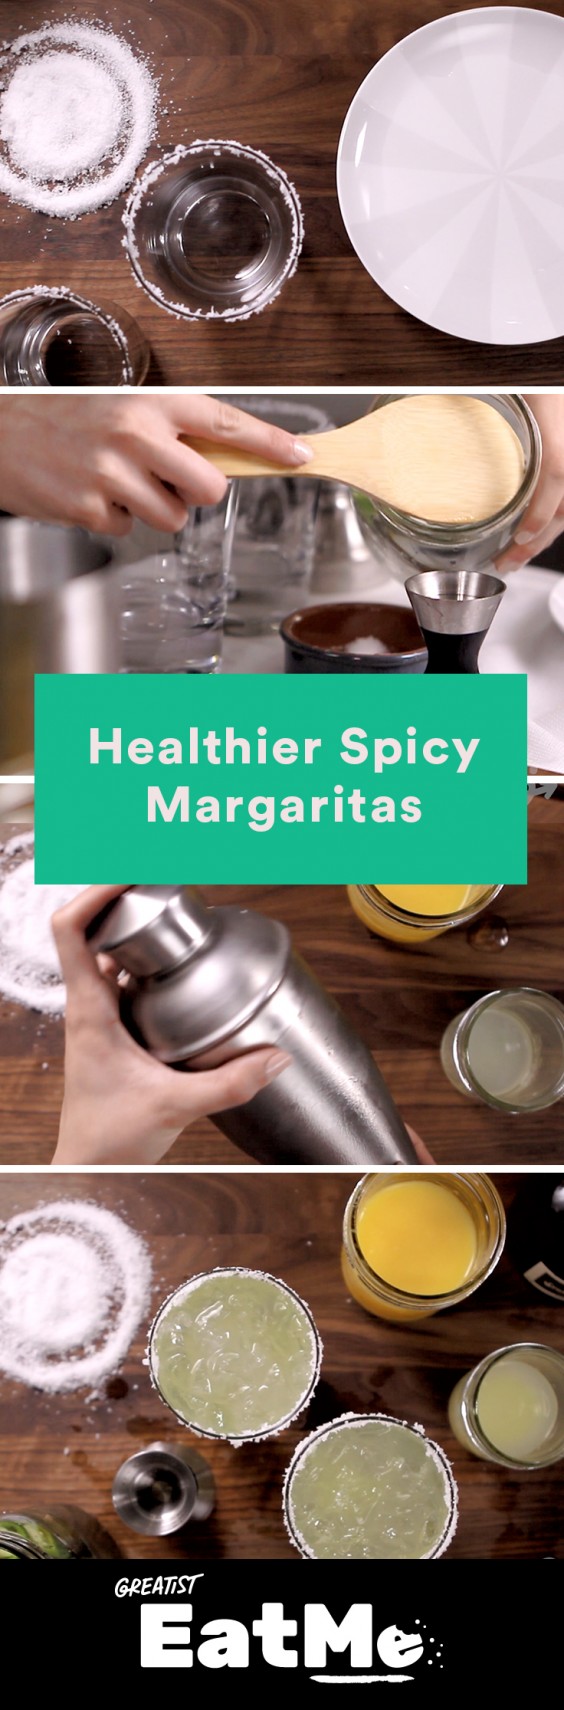 Eat Me Video: Spicy Margarita